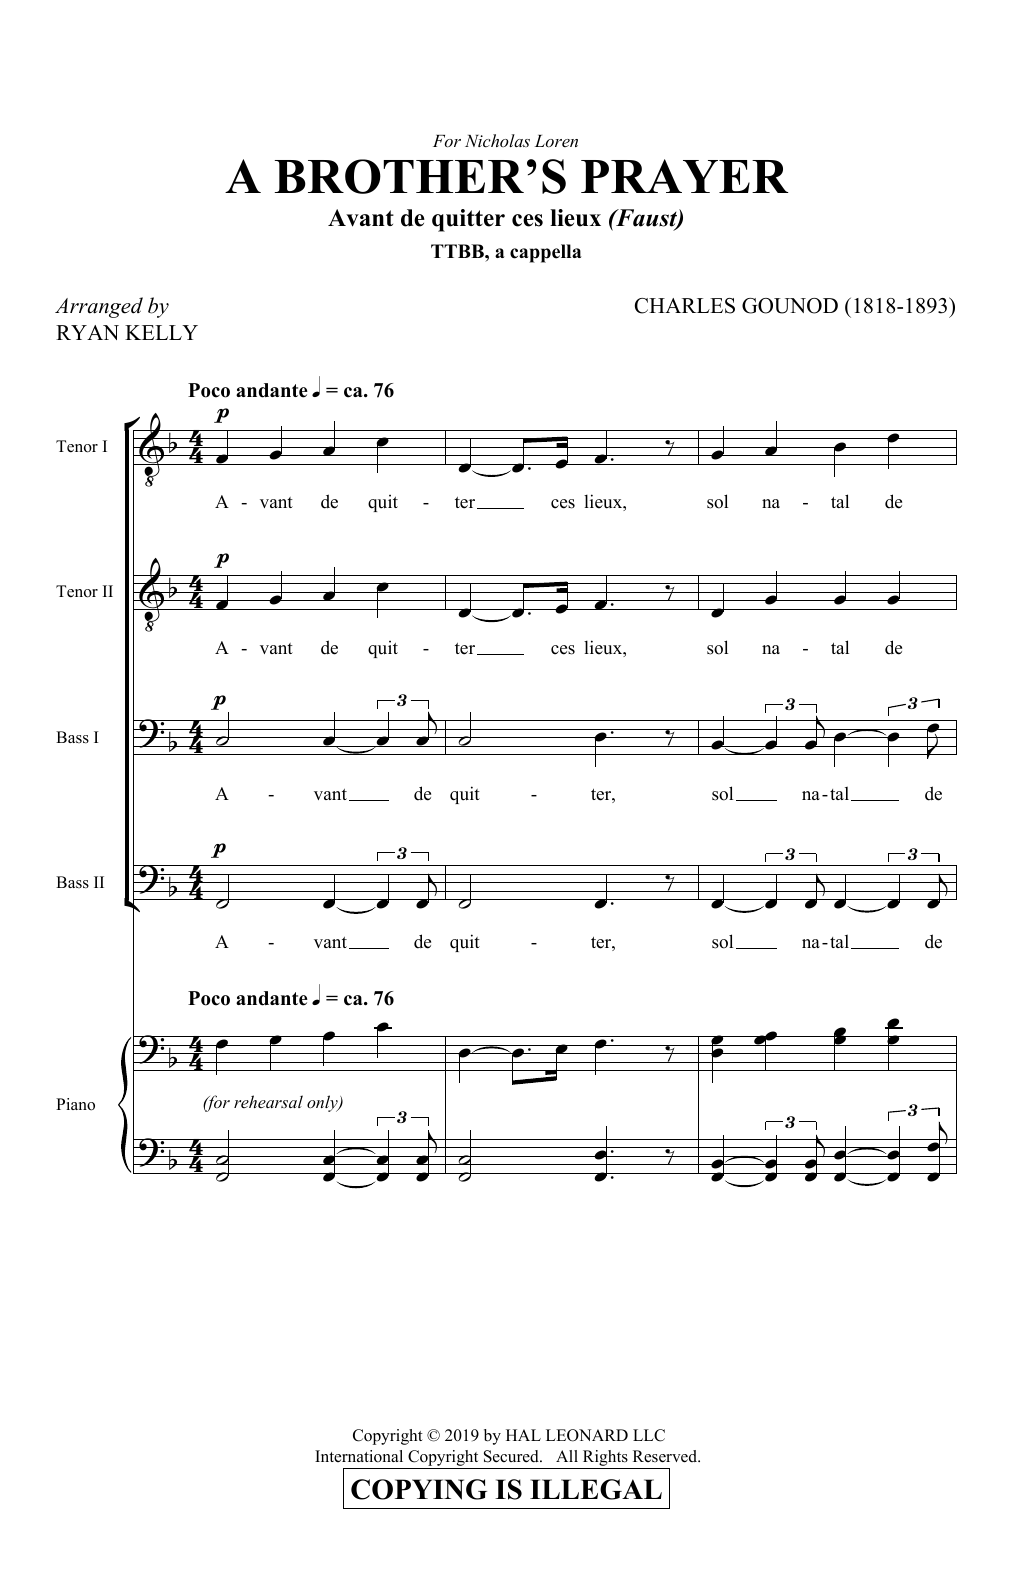 Charles Gounod A Brother's Prayer (Avant de quitter ces lieux) (arr. Ryan Kelly) Sheet Music Notes & Chords for TTBB Choir - Download or Print PDF